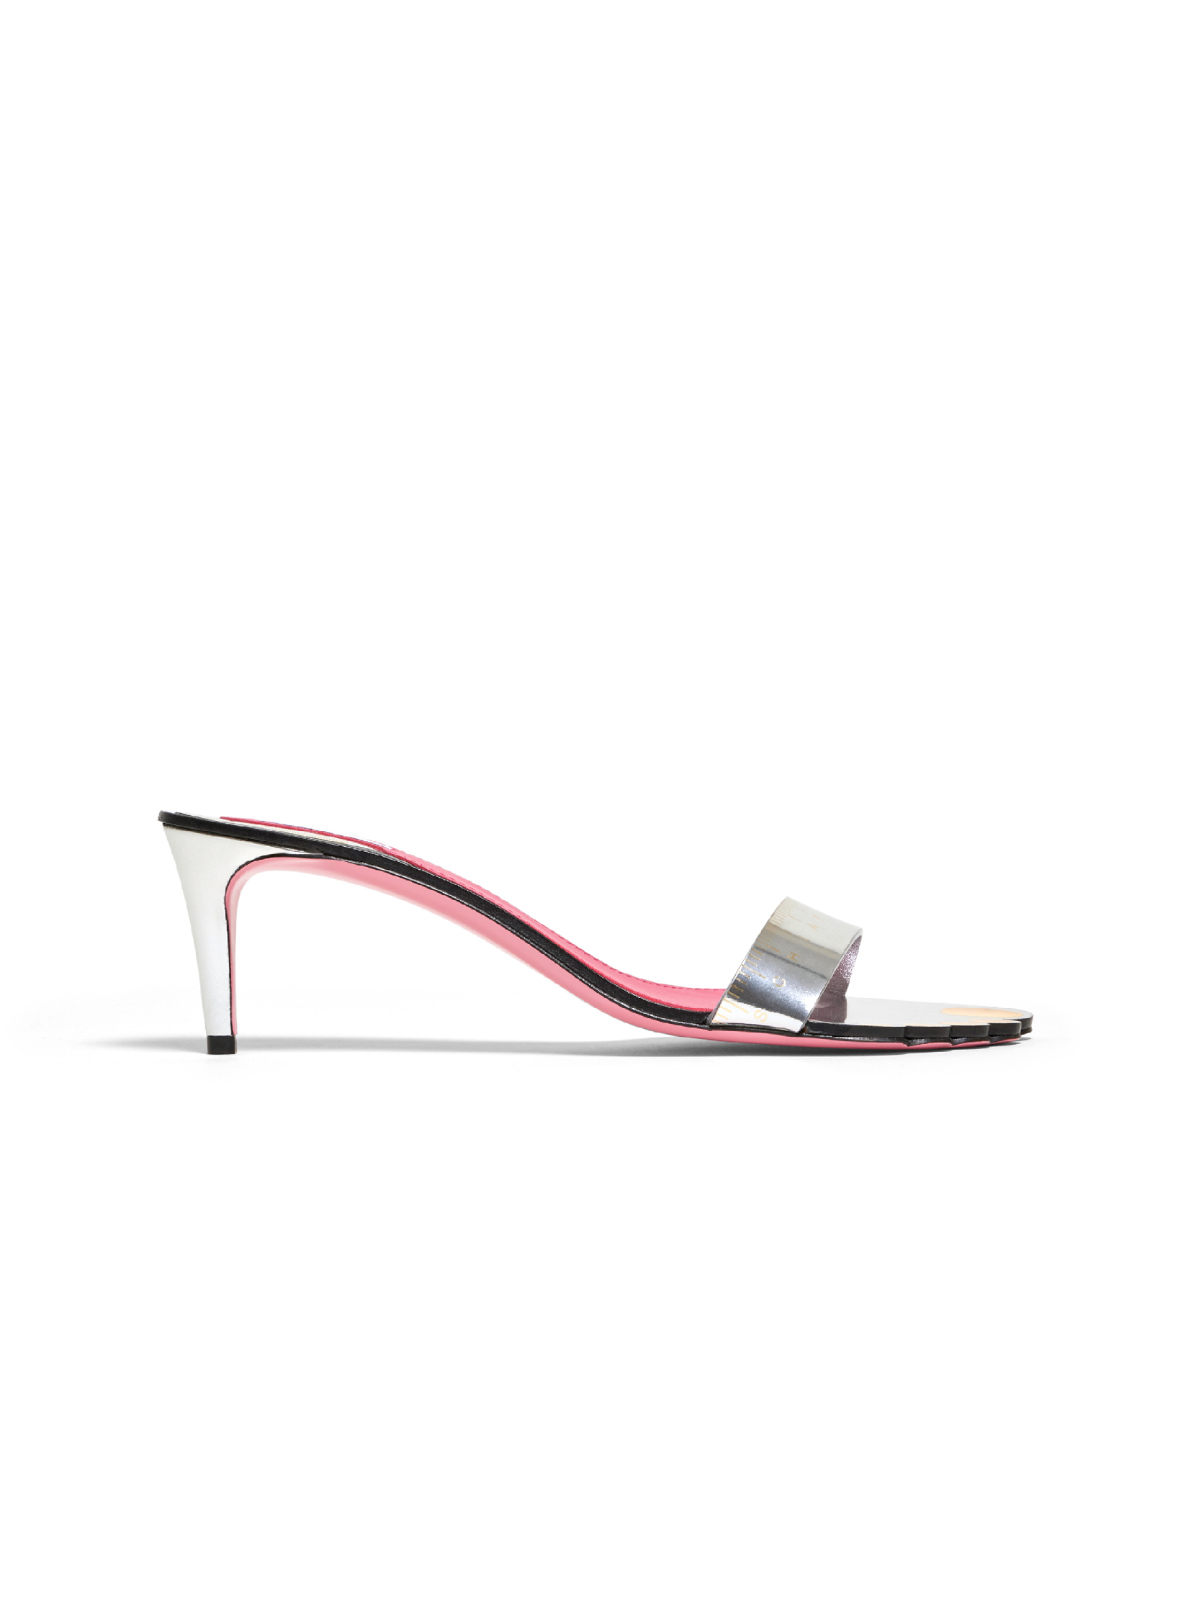 New Schiaparelli Spring Summer 2022 RTW Accessories: Footwear Collection